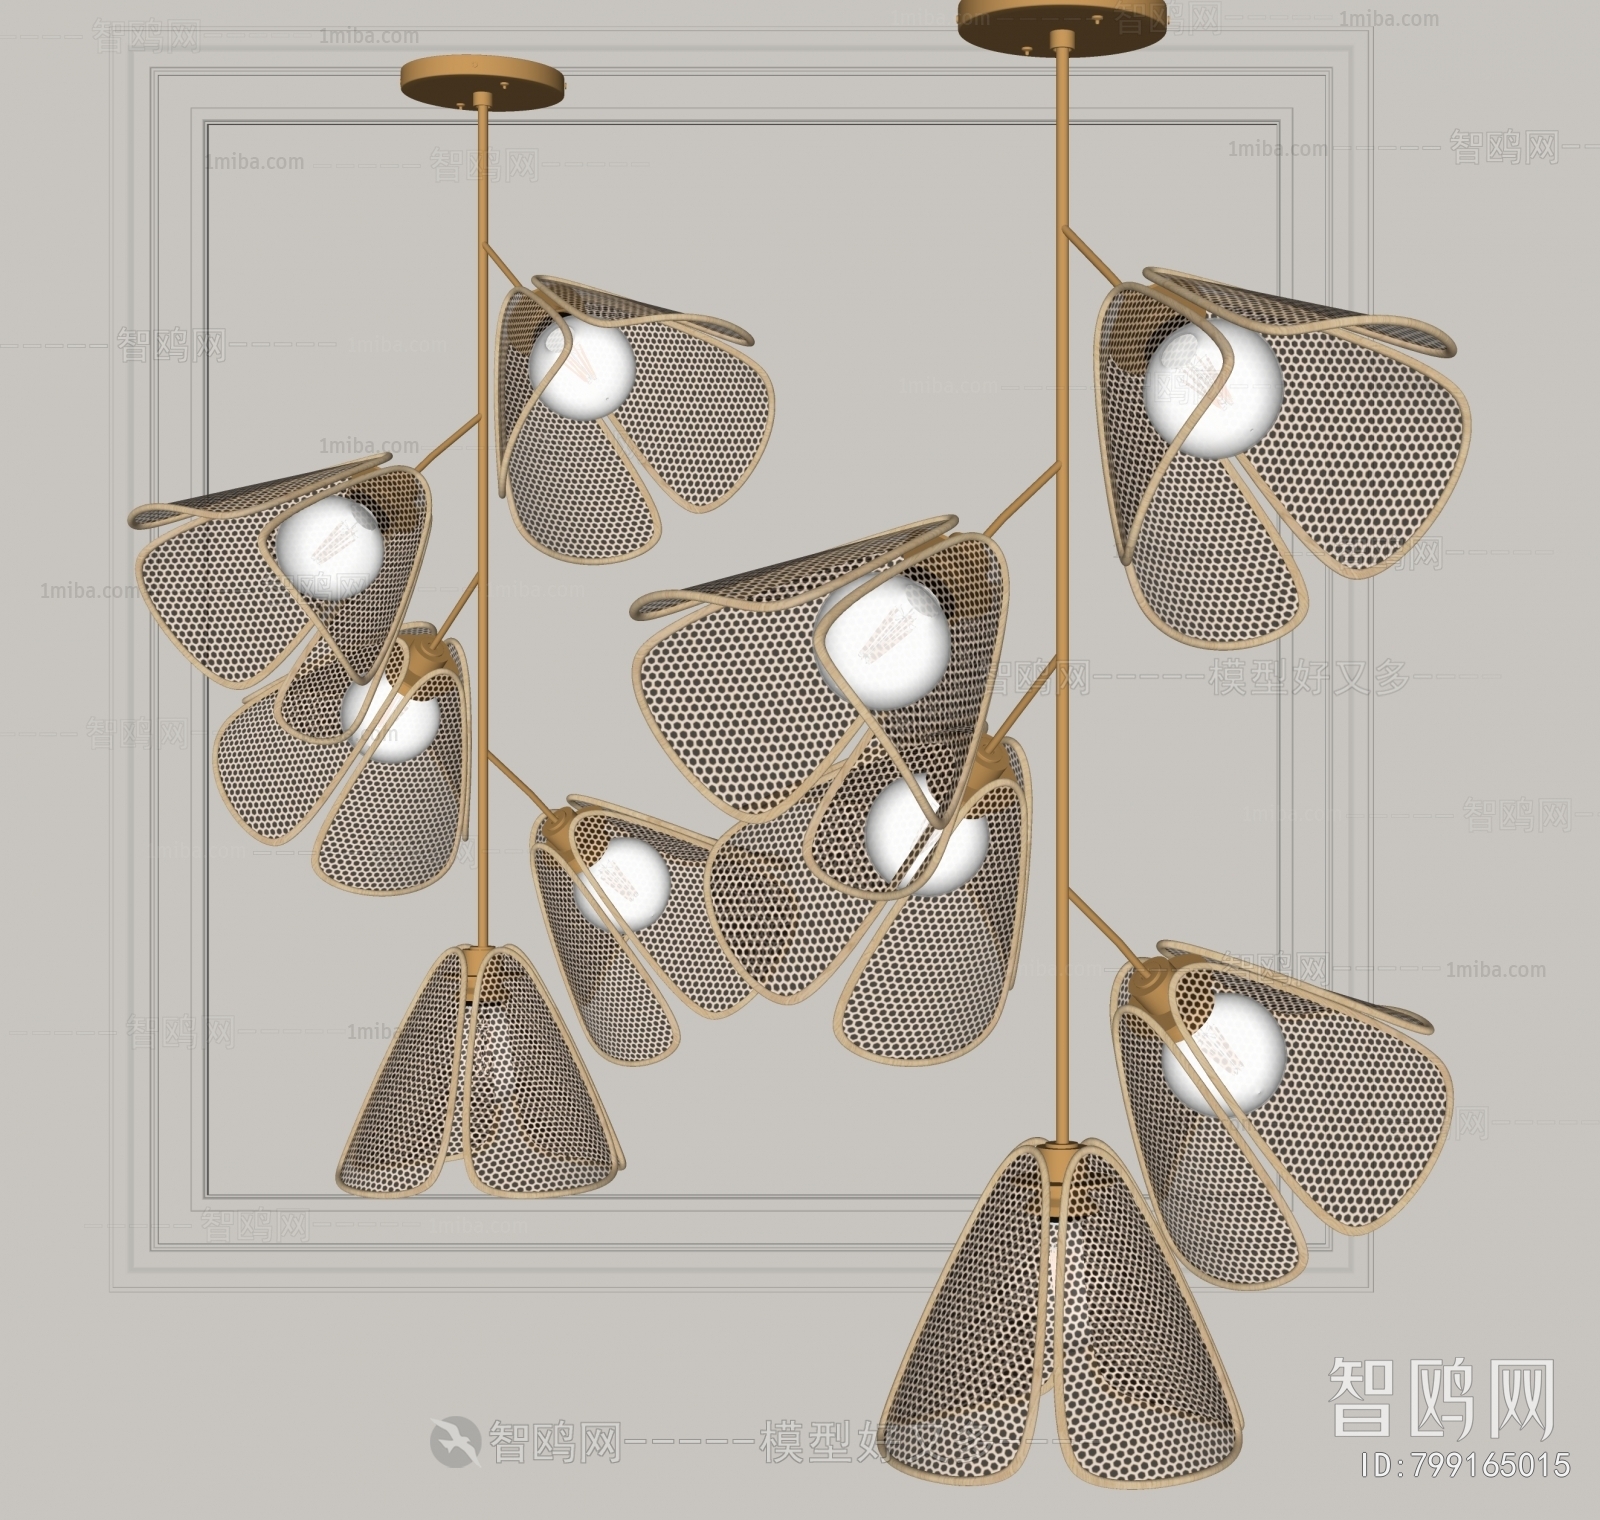 Modern Decorative Lamp